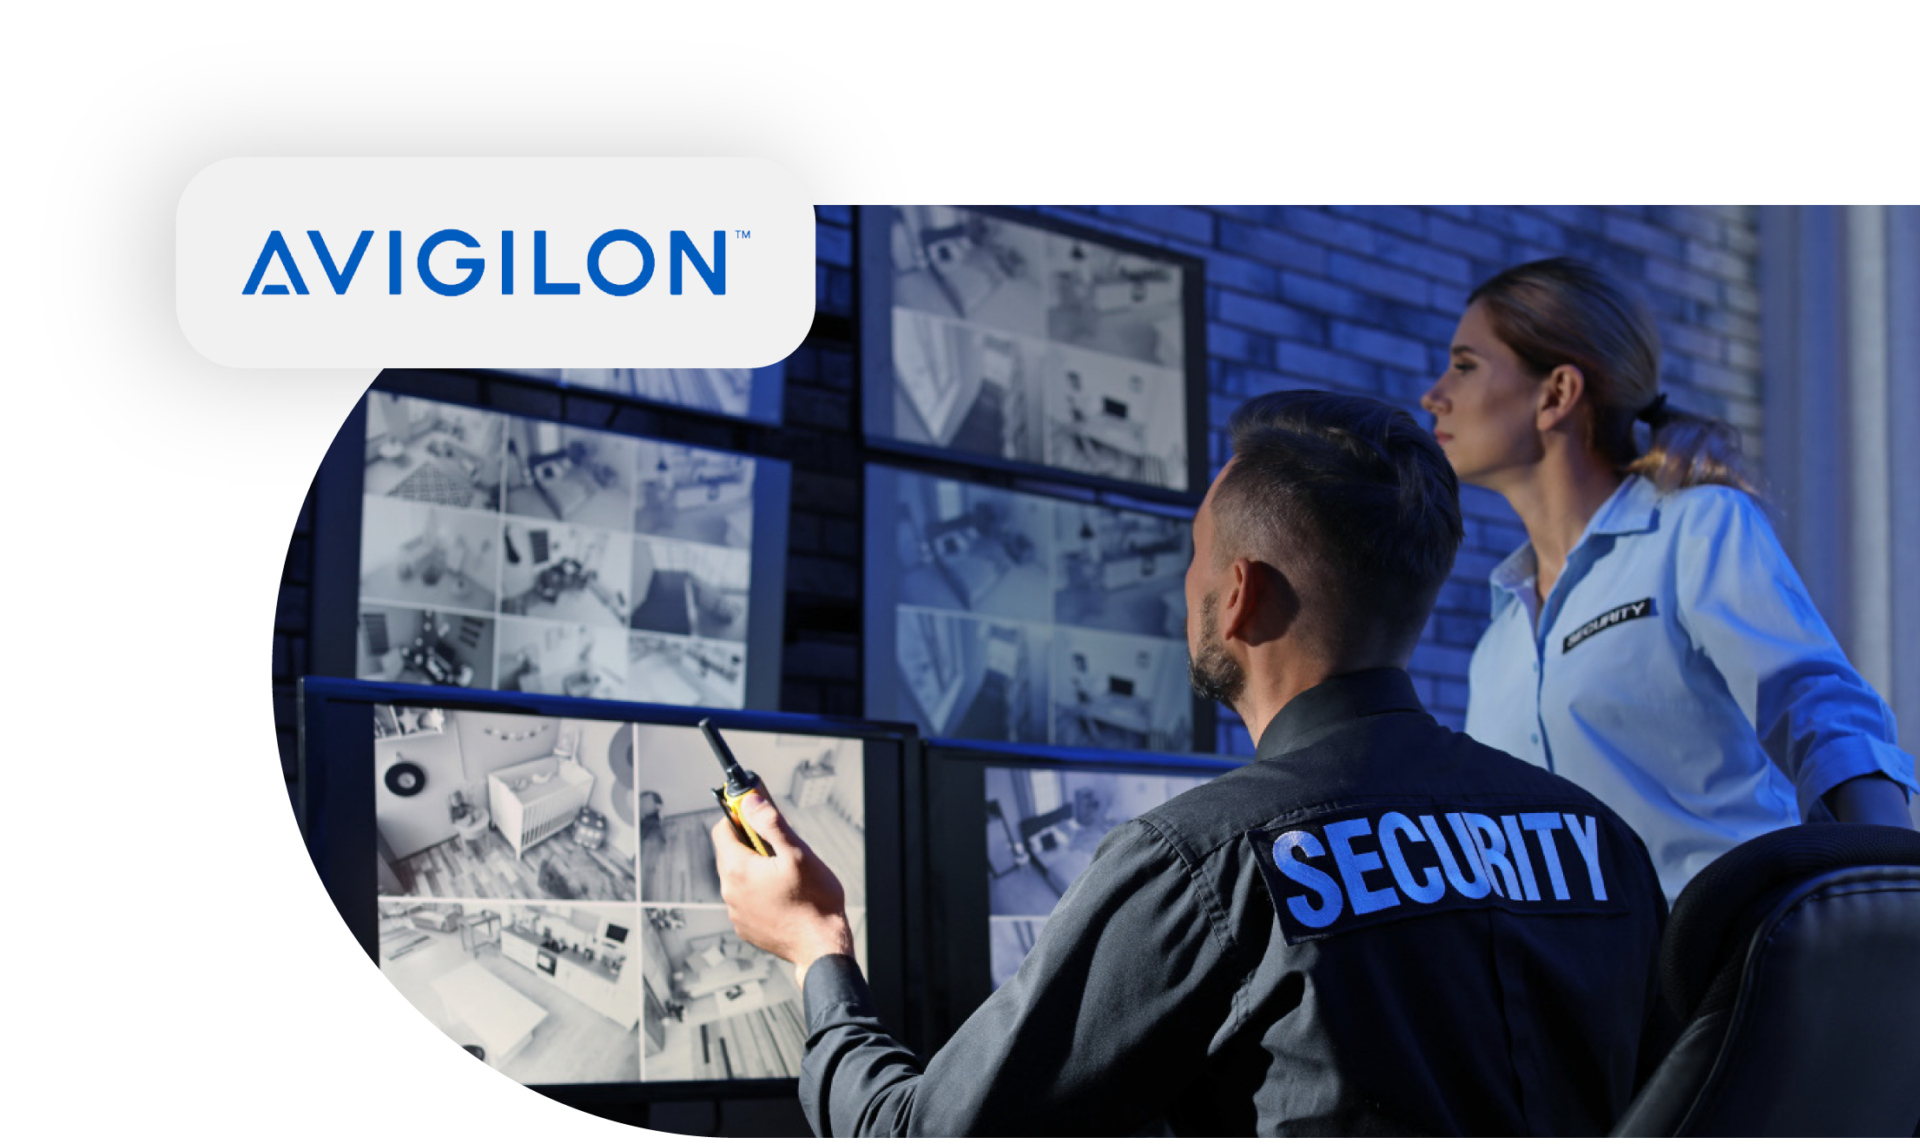 Avigilon - Security that evolves. Safety that endures.